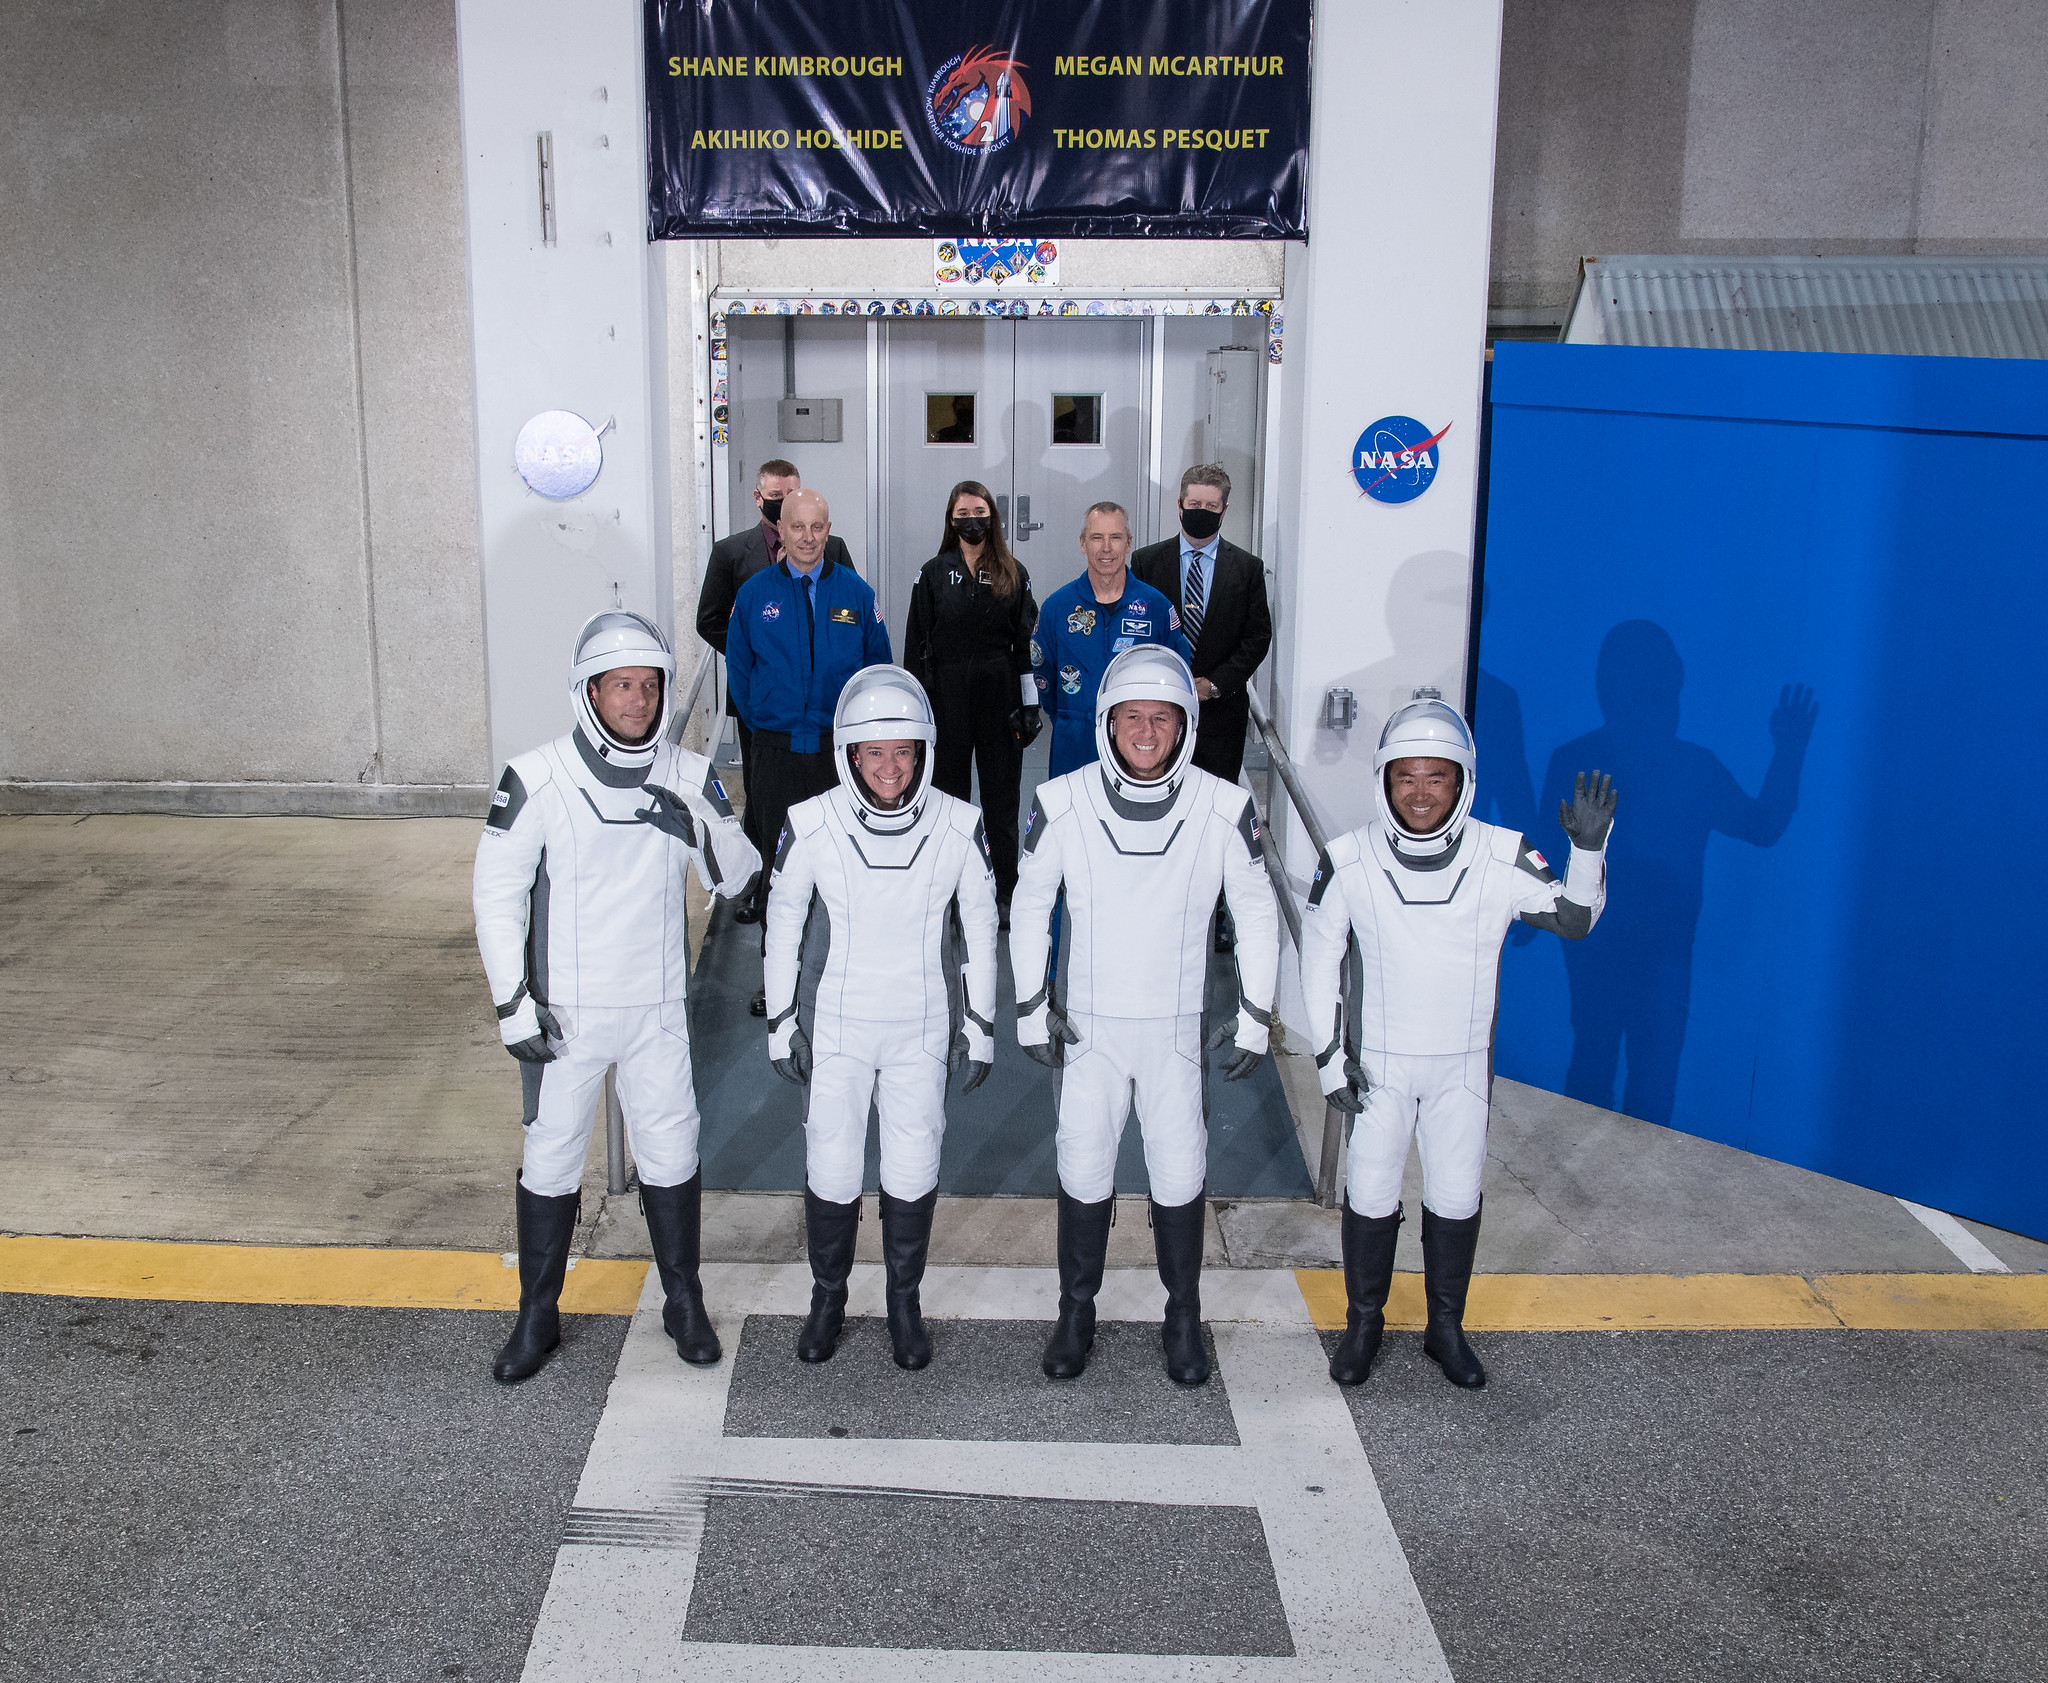 From left to right, ESA (European Space Agency) astronaut Thomas Pesquet, NASA astronauts Megan McArthur and Shane Kimbrough, and Japan Aerospace Exploration Agency (JAXA) astronaut Akihiko Hoshide, wearing SpaceX spacesuits